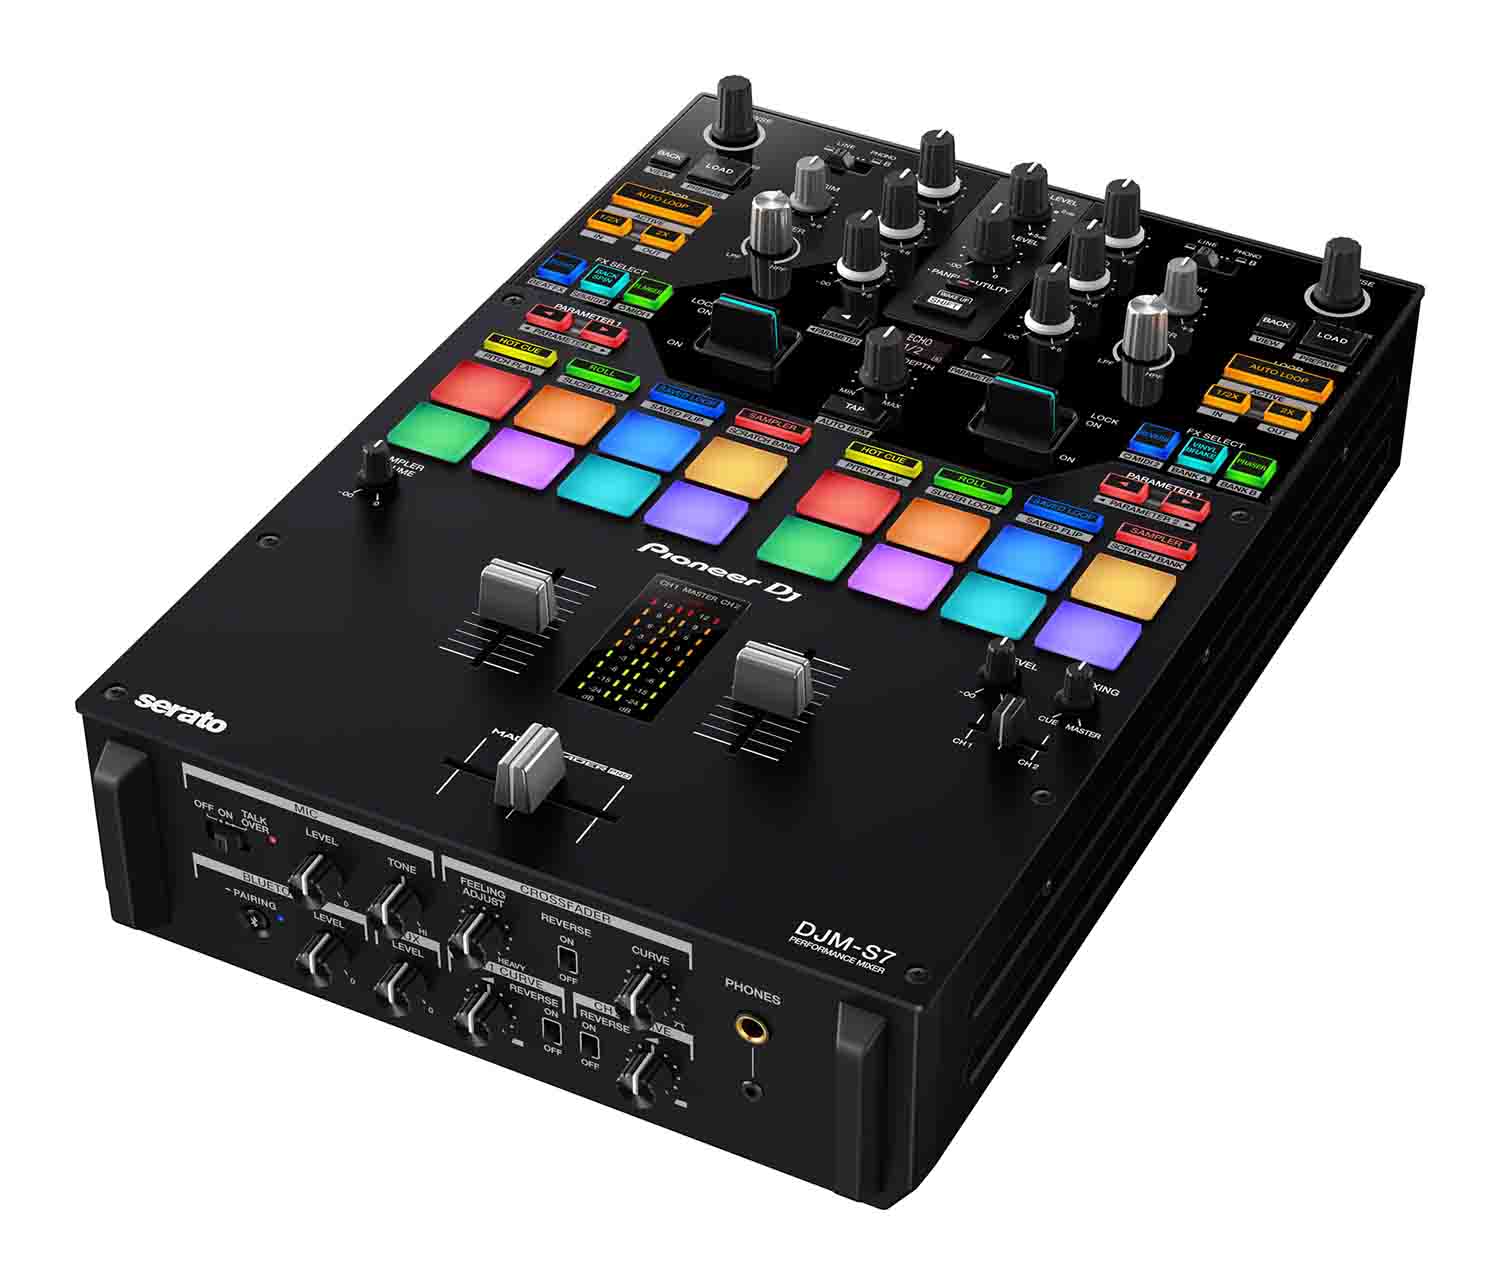 B-STOCK: Pioneer DJ DJM-S7 Scratch-Style 2-Channel Performance DJ Mixer - Black - Hollywood DJ